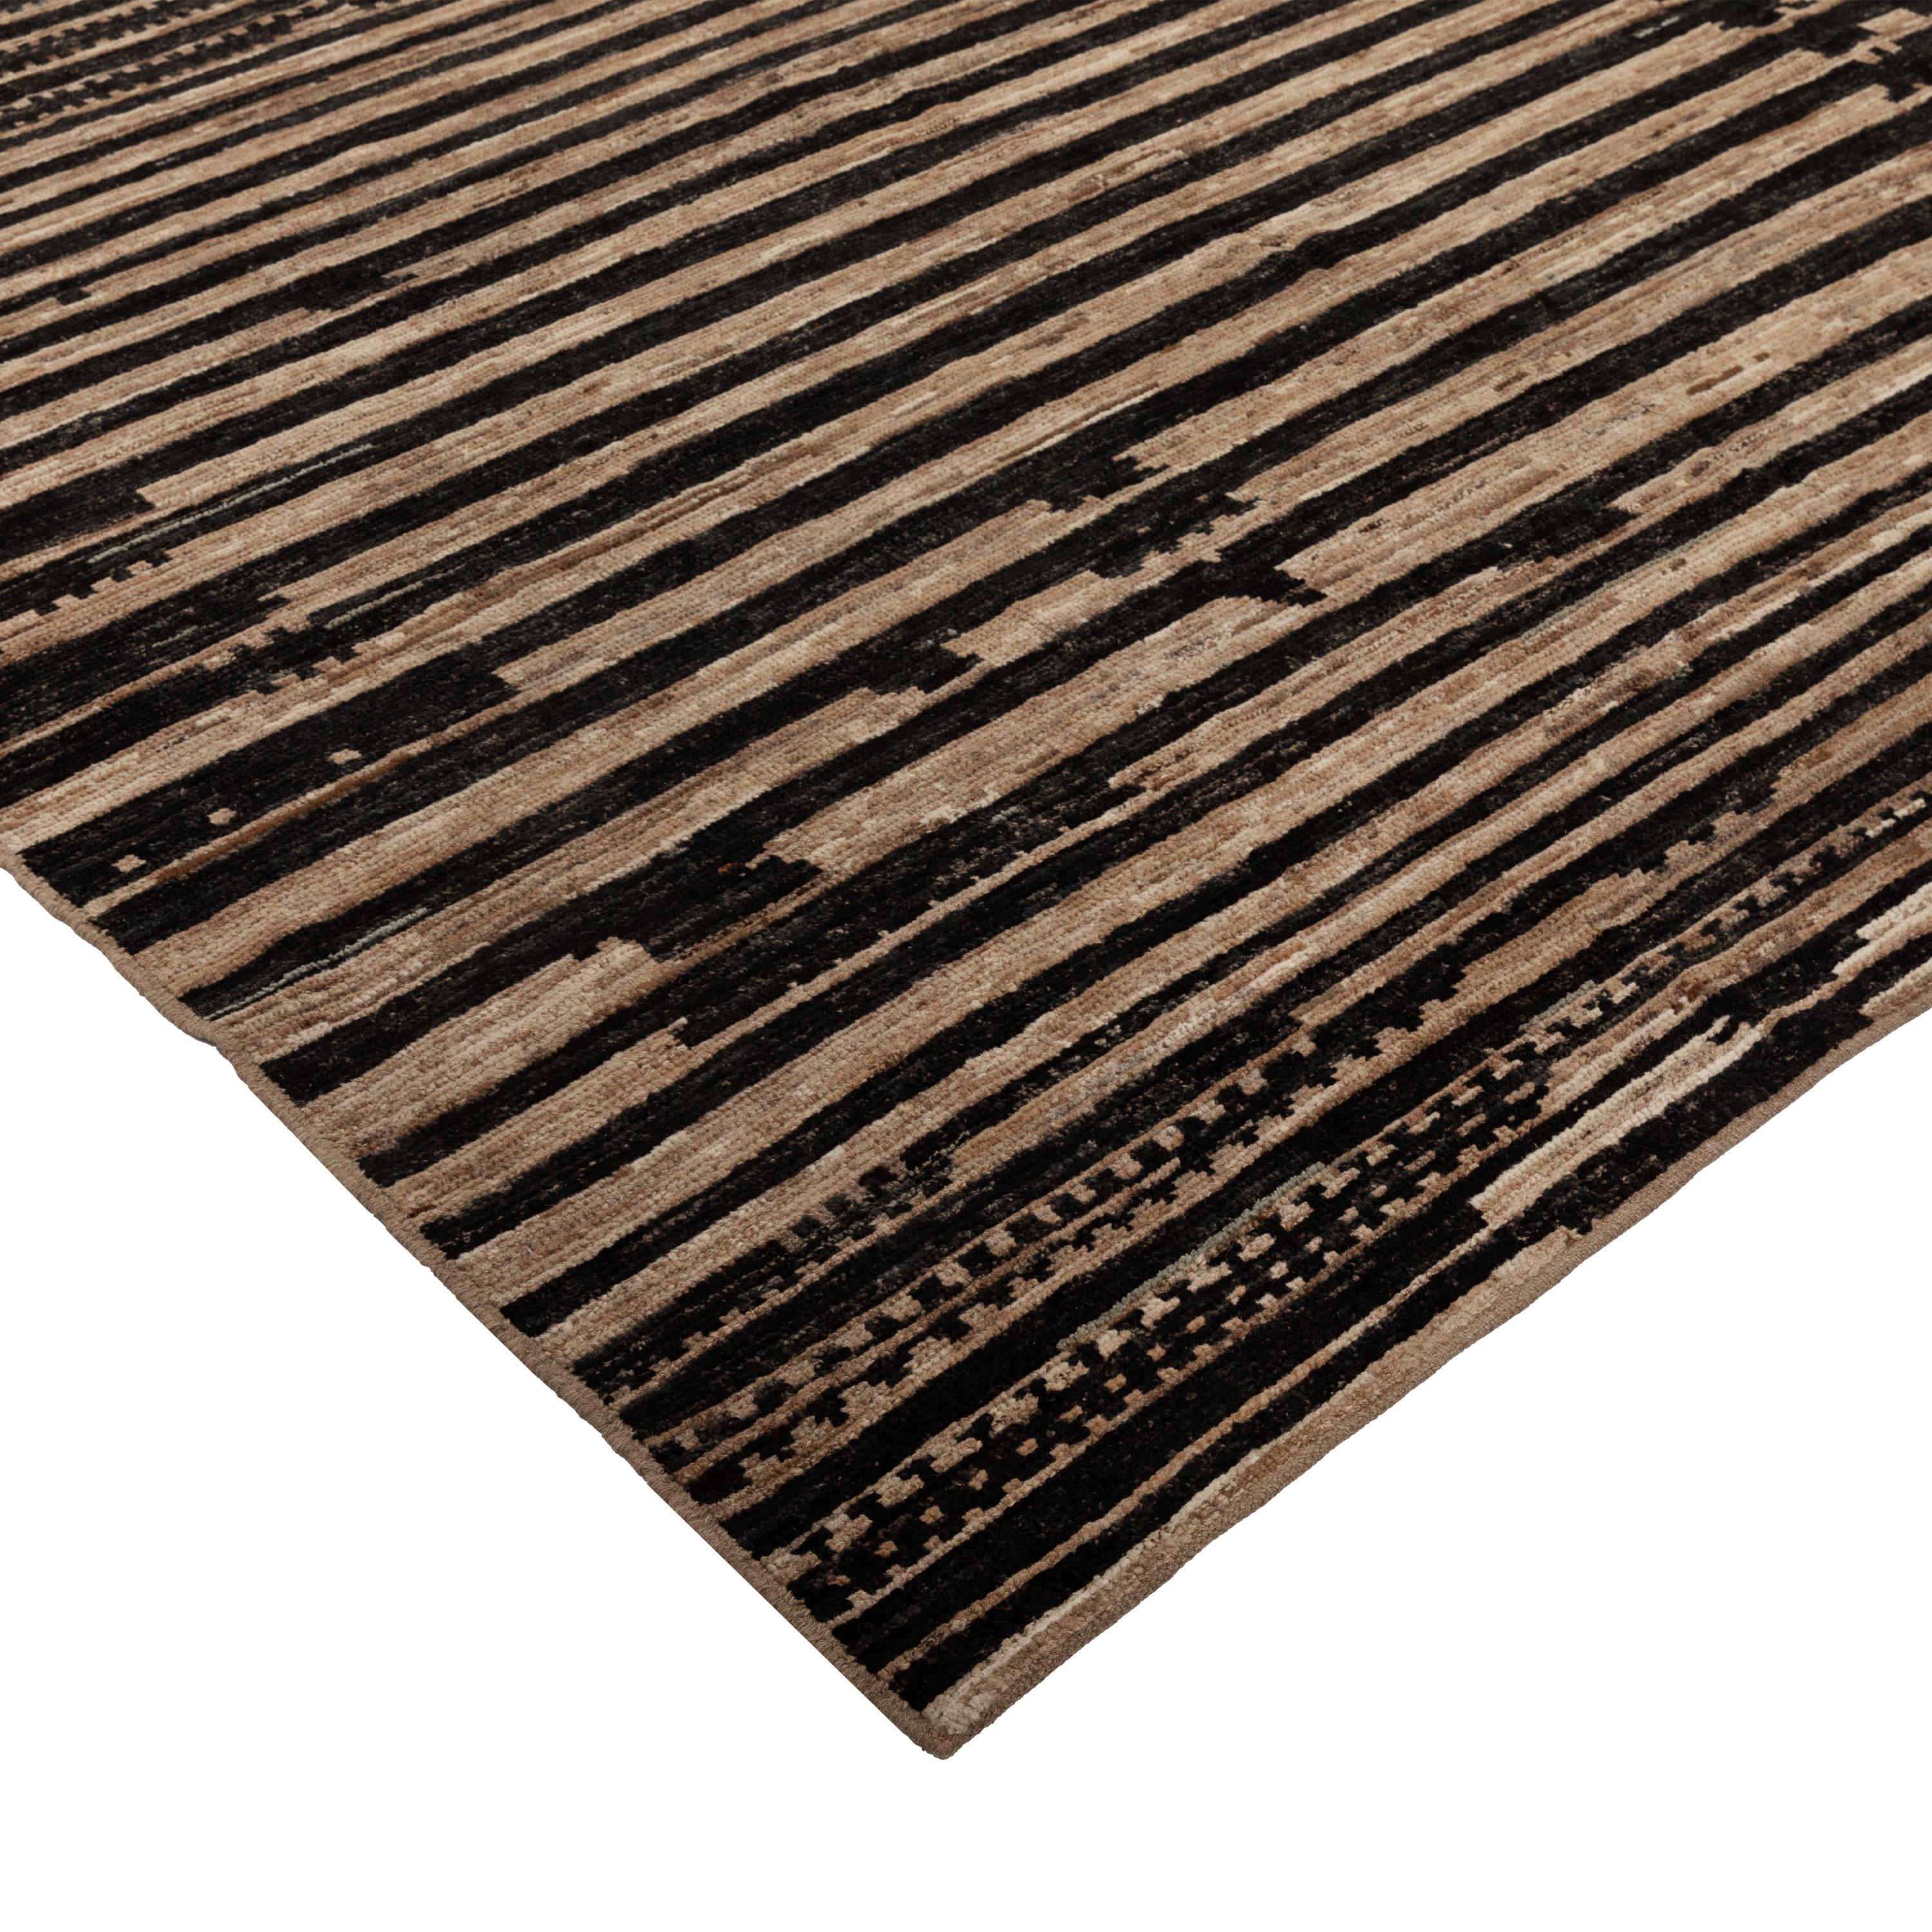 Afghan abc carpet Zameen Black and Brown Striped Modern Wool Rug - 7'9